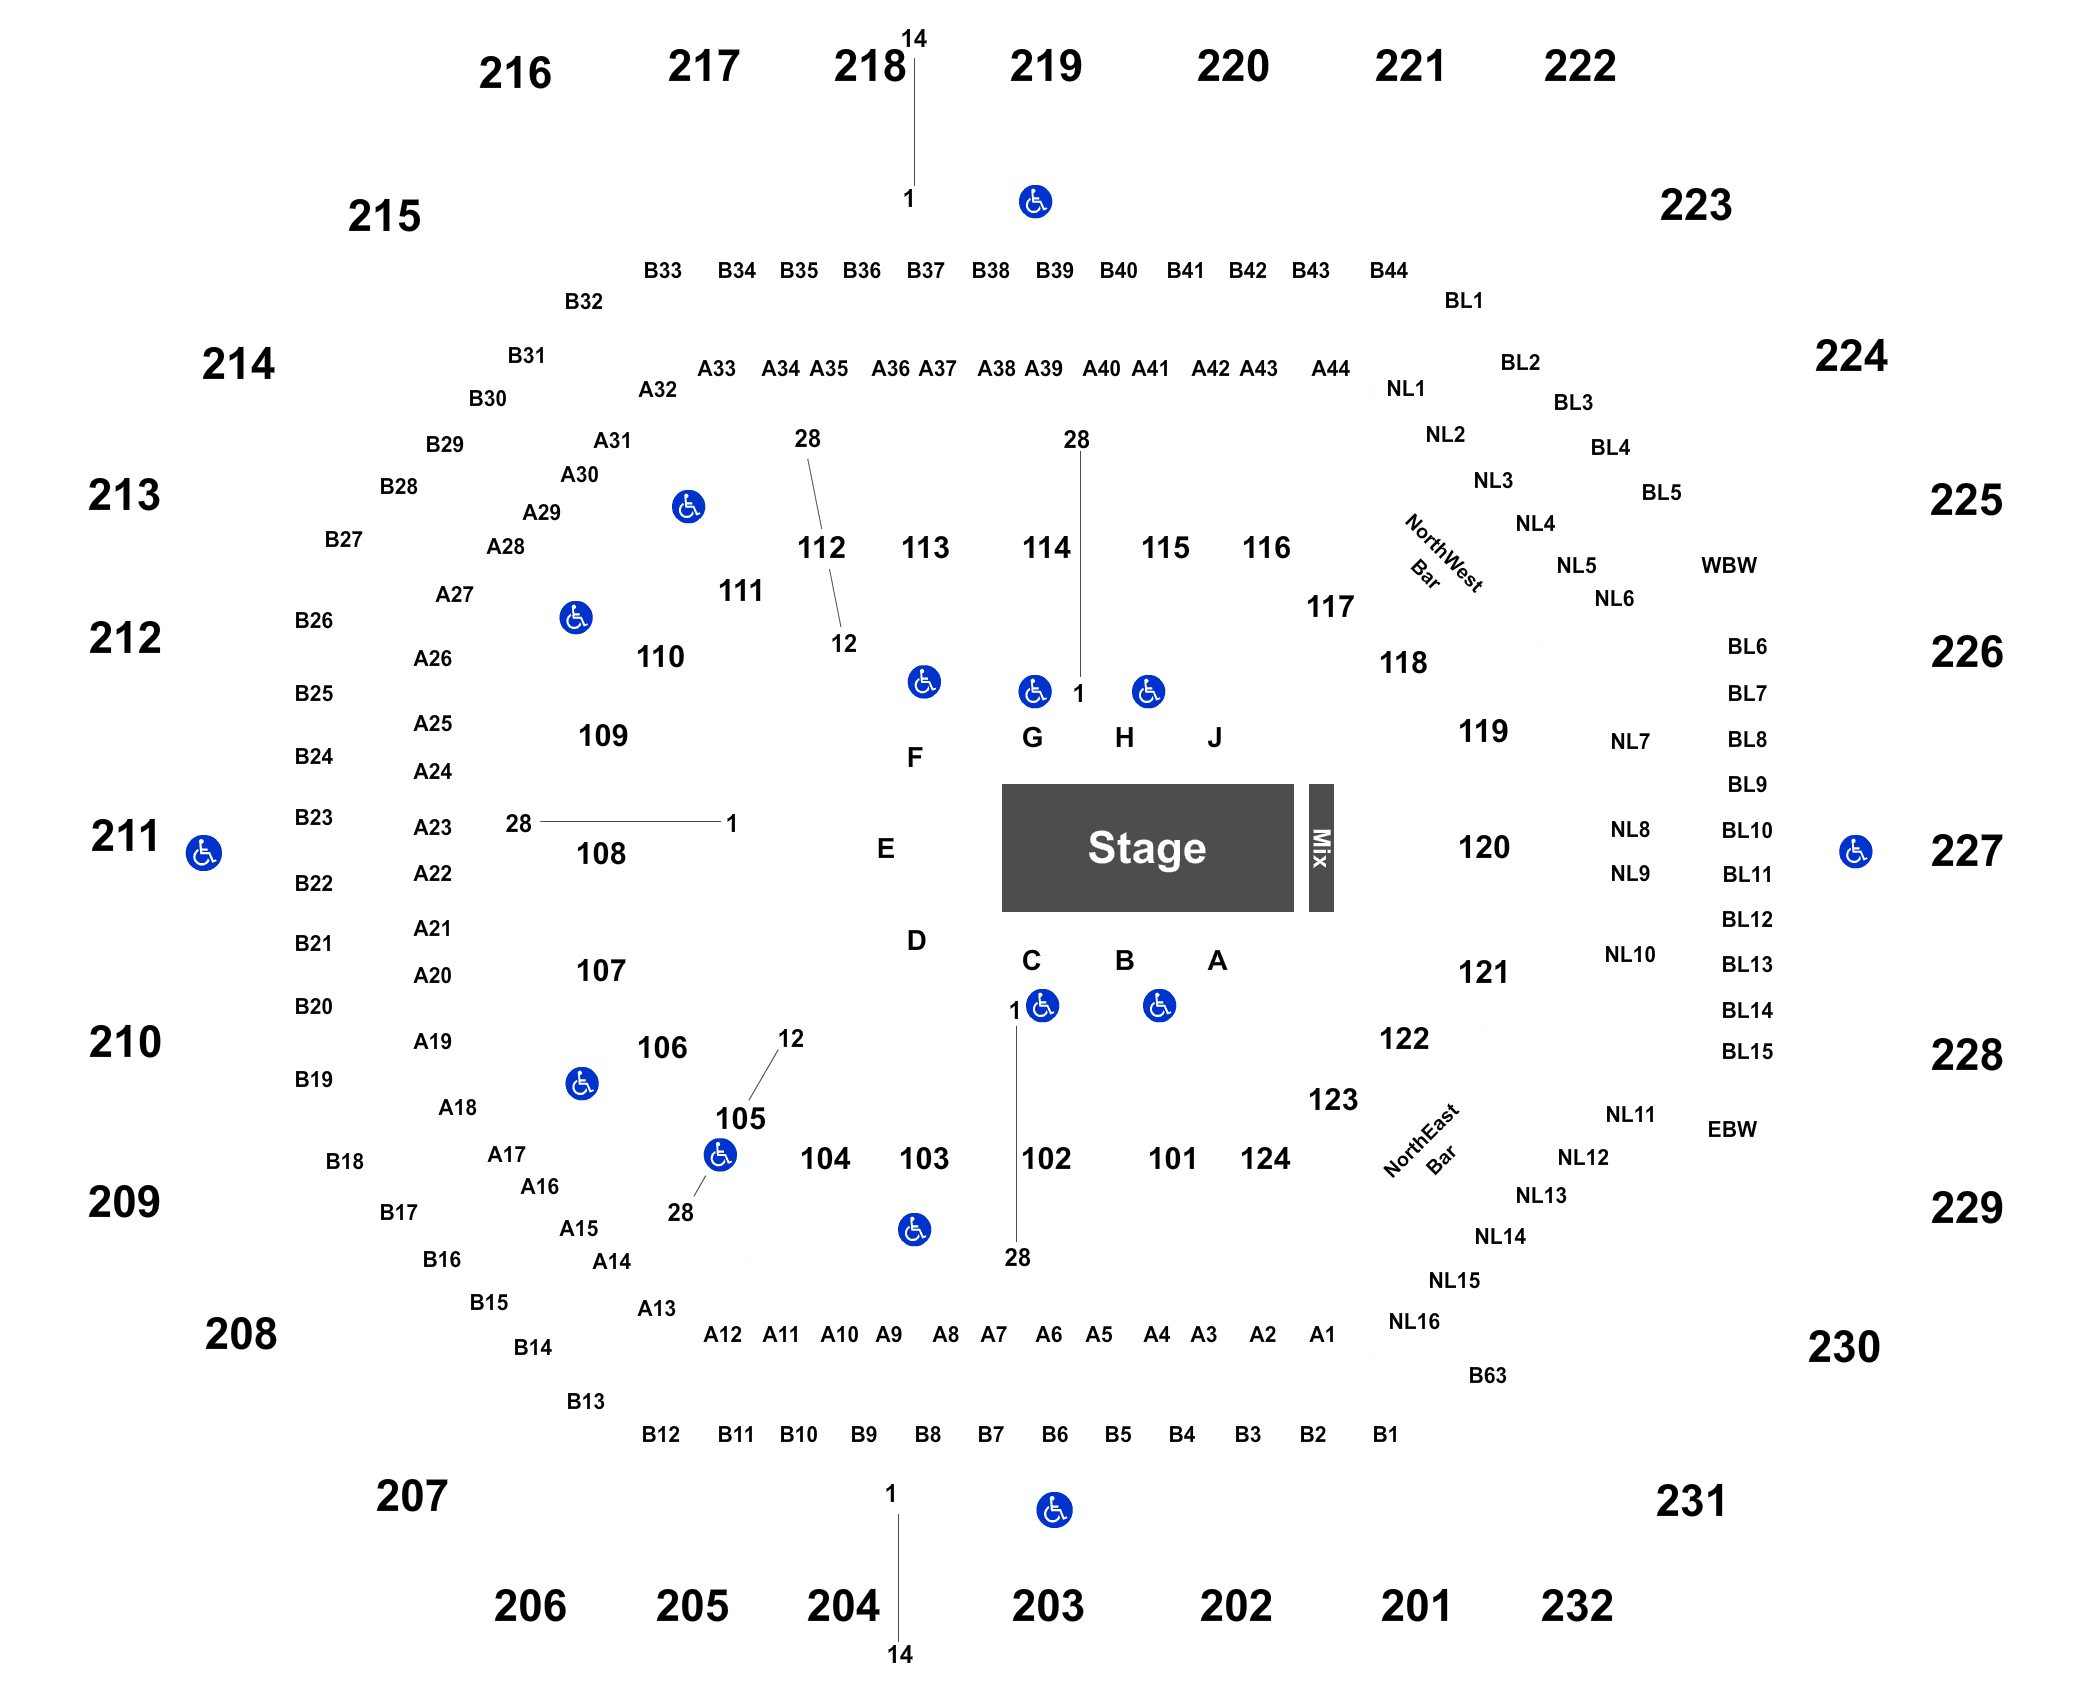 Bad Bunny Tickets Sun Mar 6 2022 7 00 Pm At Phoenix Suns Arena In Phoenix Az